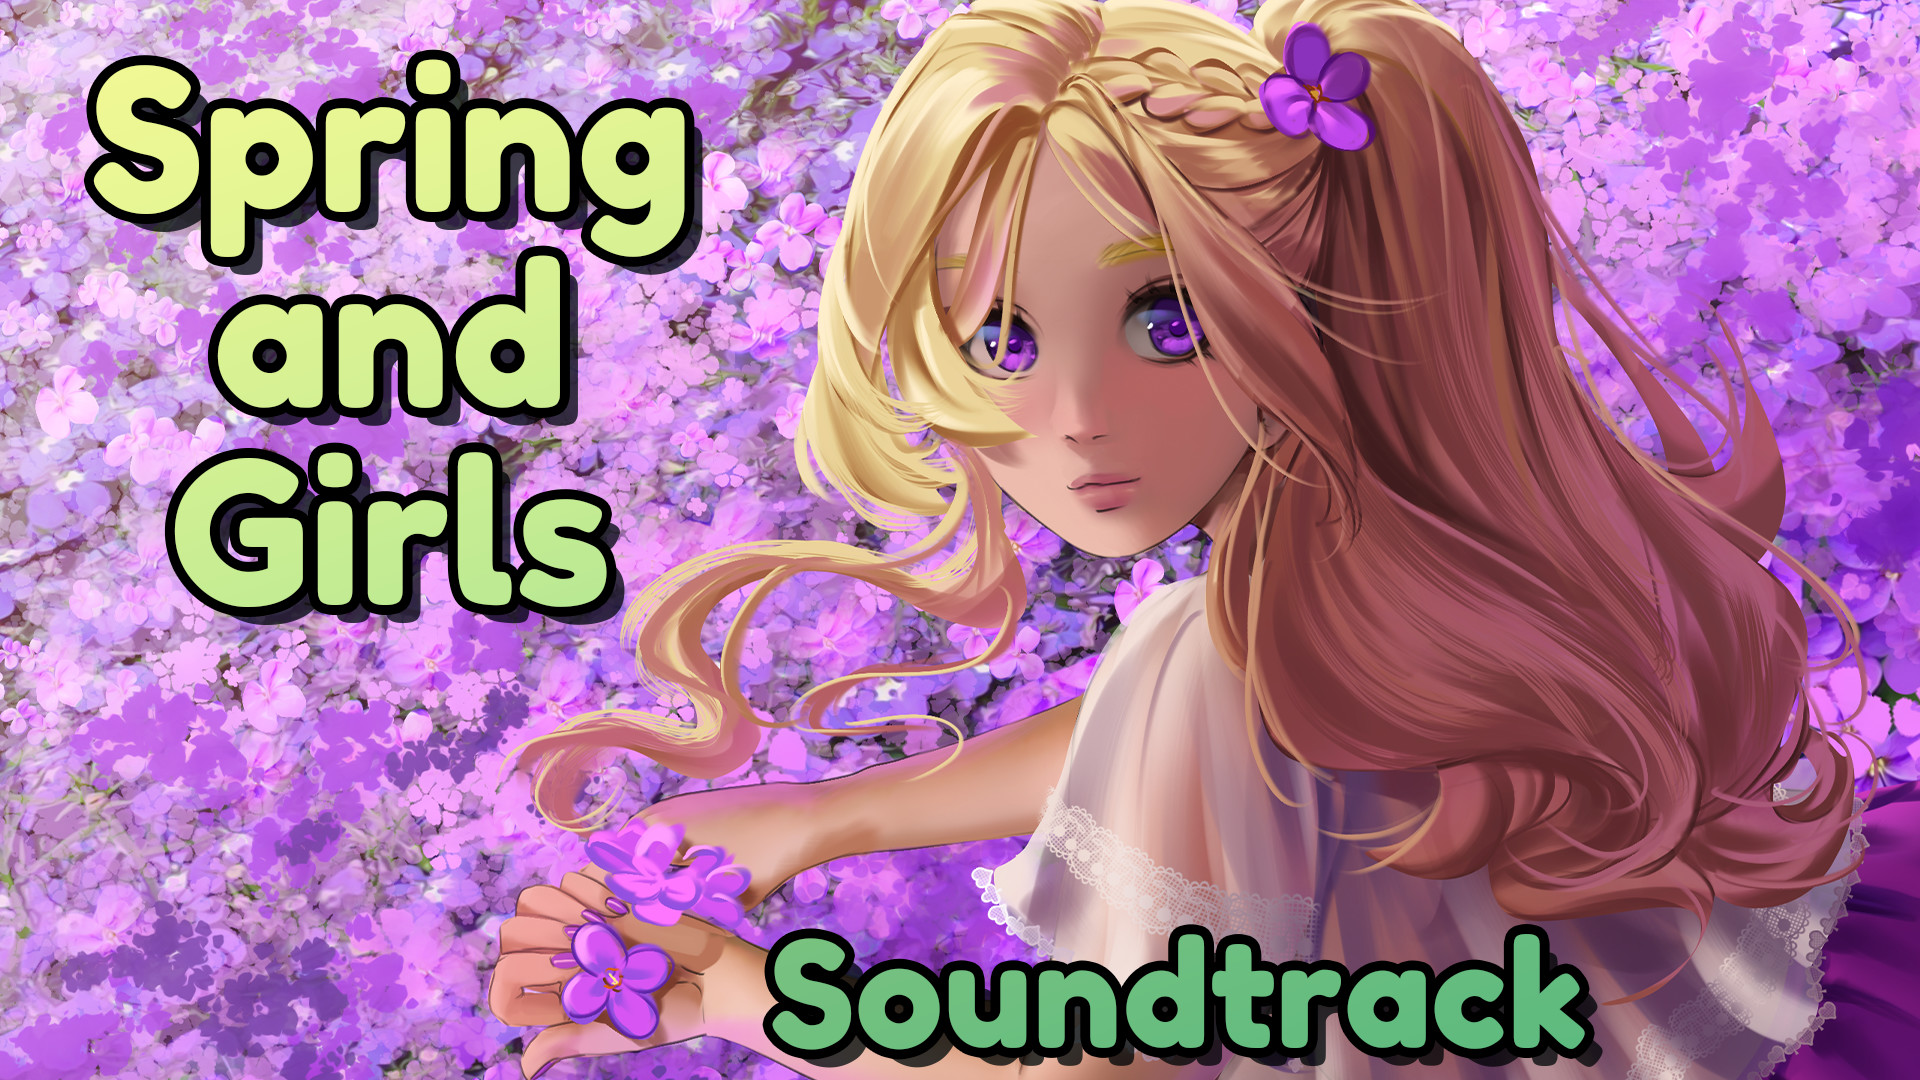 Charlies Angels Bad girls Soundtrack. Girl soundtrack